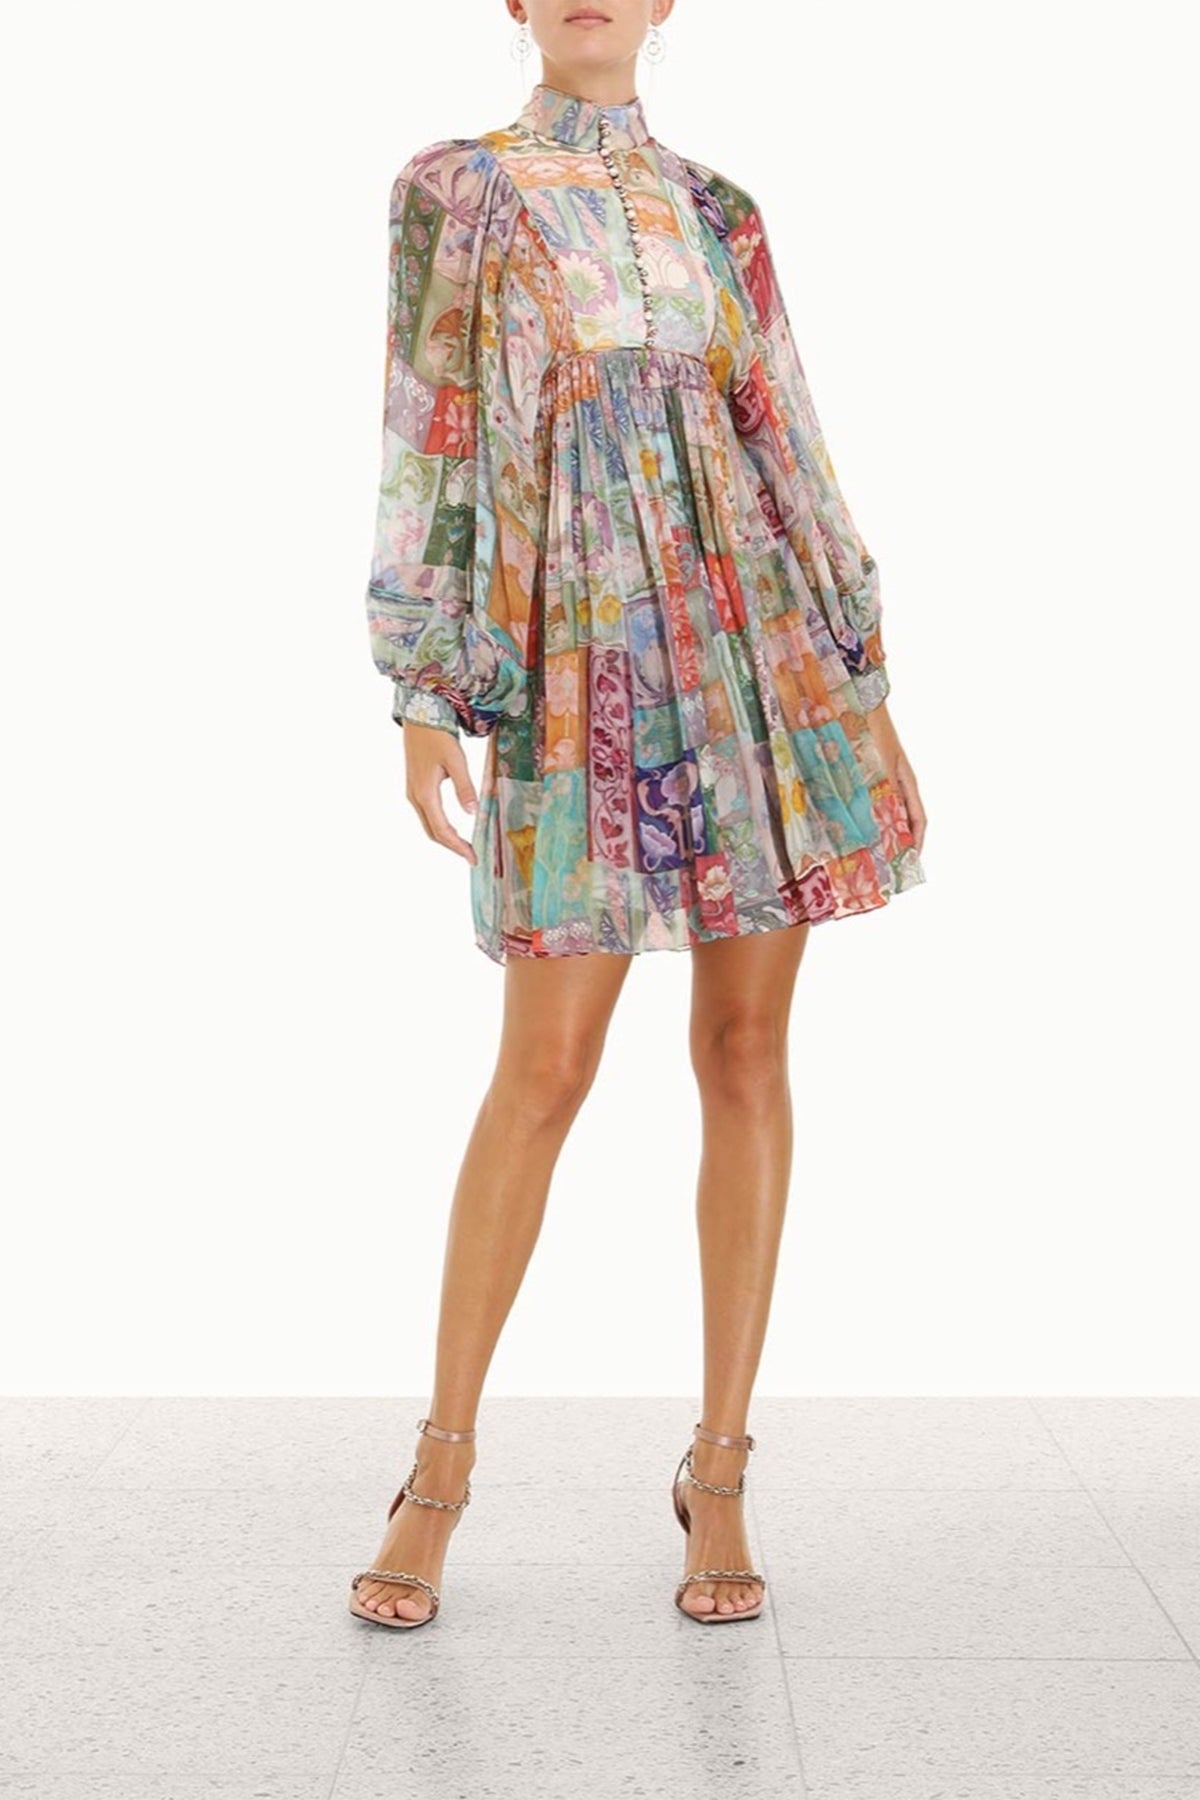 Cosmic Smock Mini Dress in Floral Tile - shop-olivia.com